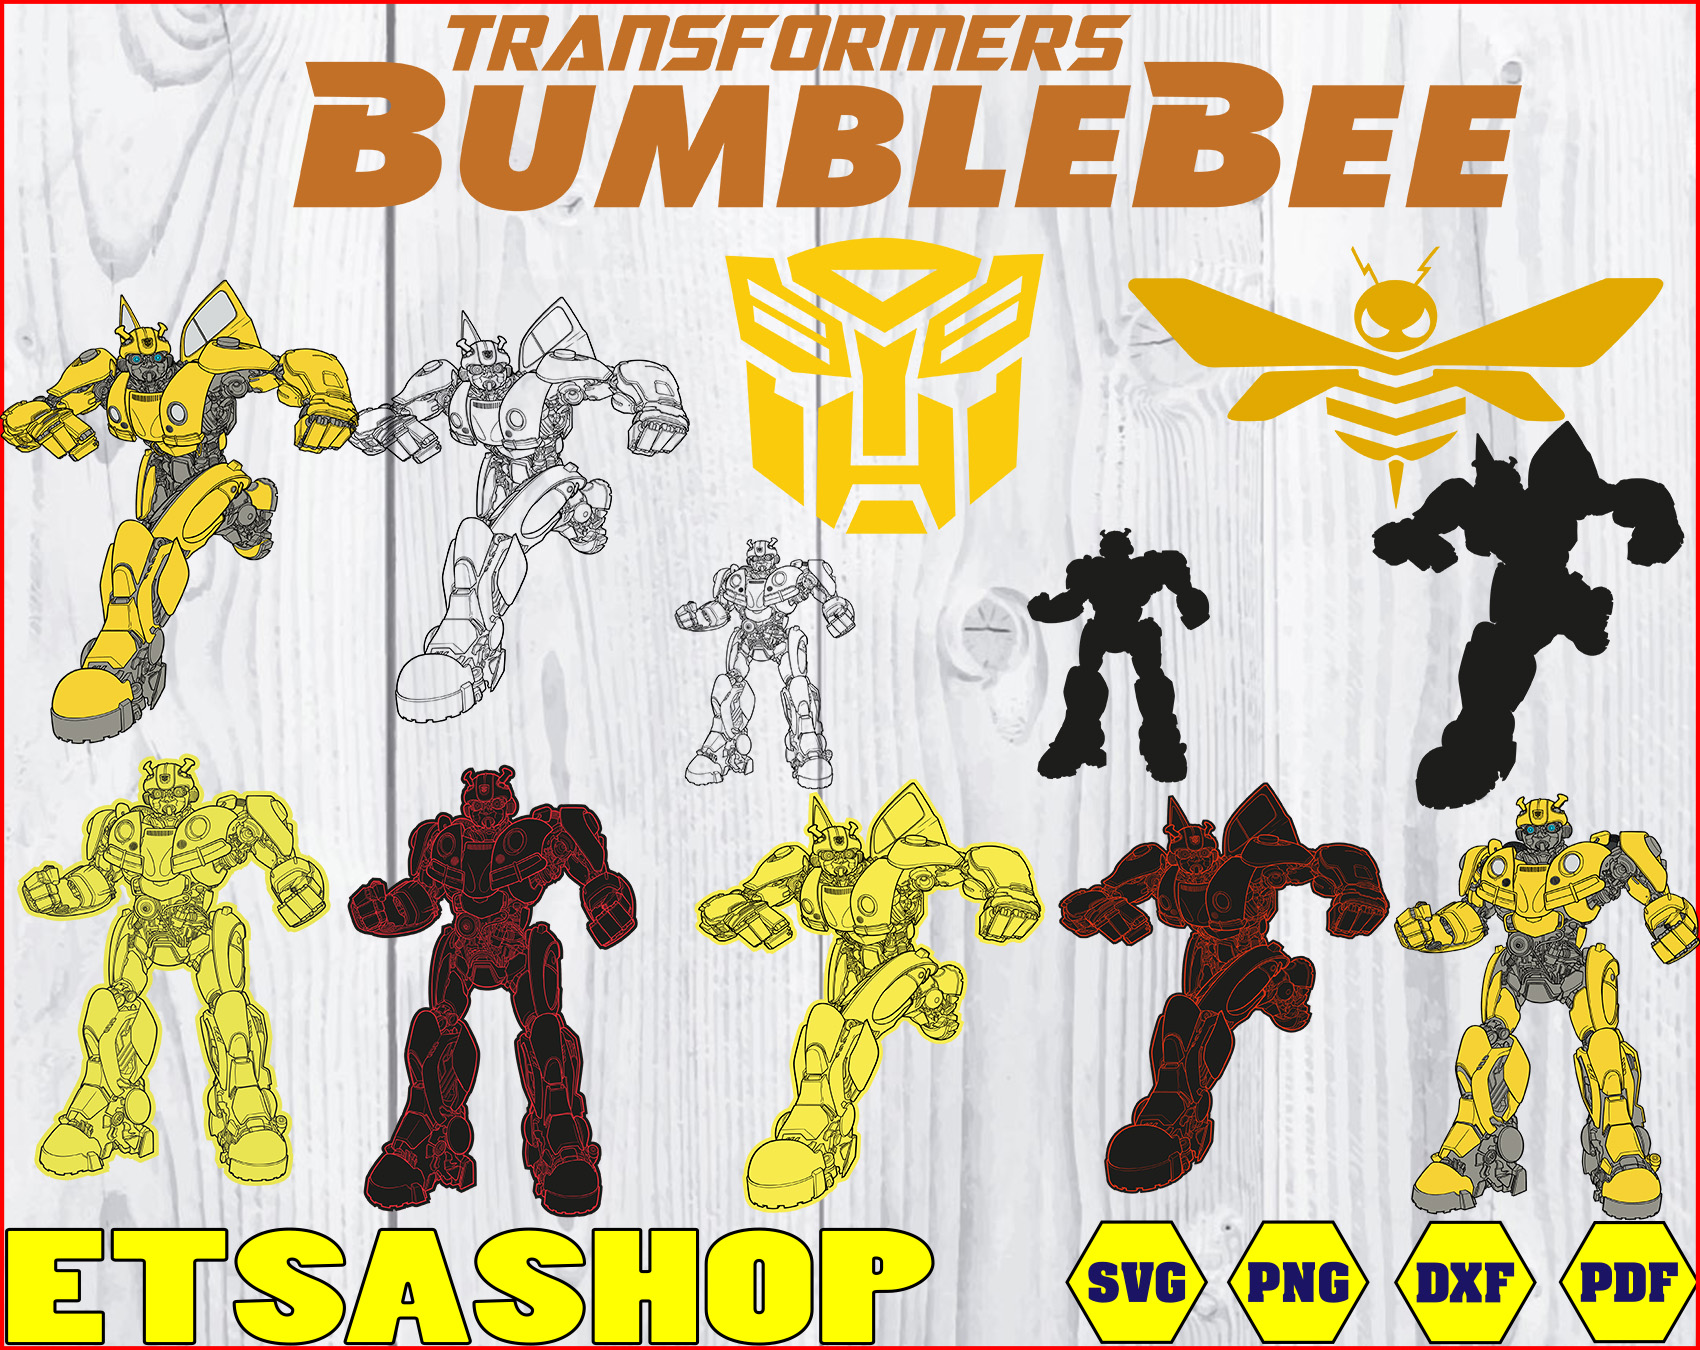 Download Bumblebee Transformer Svg Bundle Cut Files Bumblebeetransformer Logo Svg Cricut Clipart Digital Download Outstanding And Different